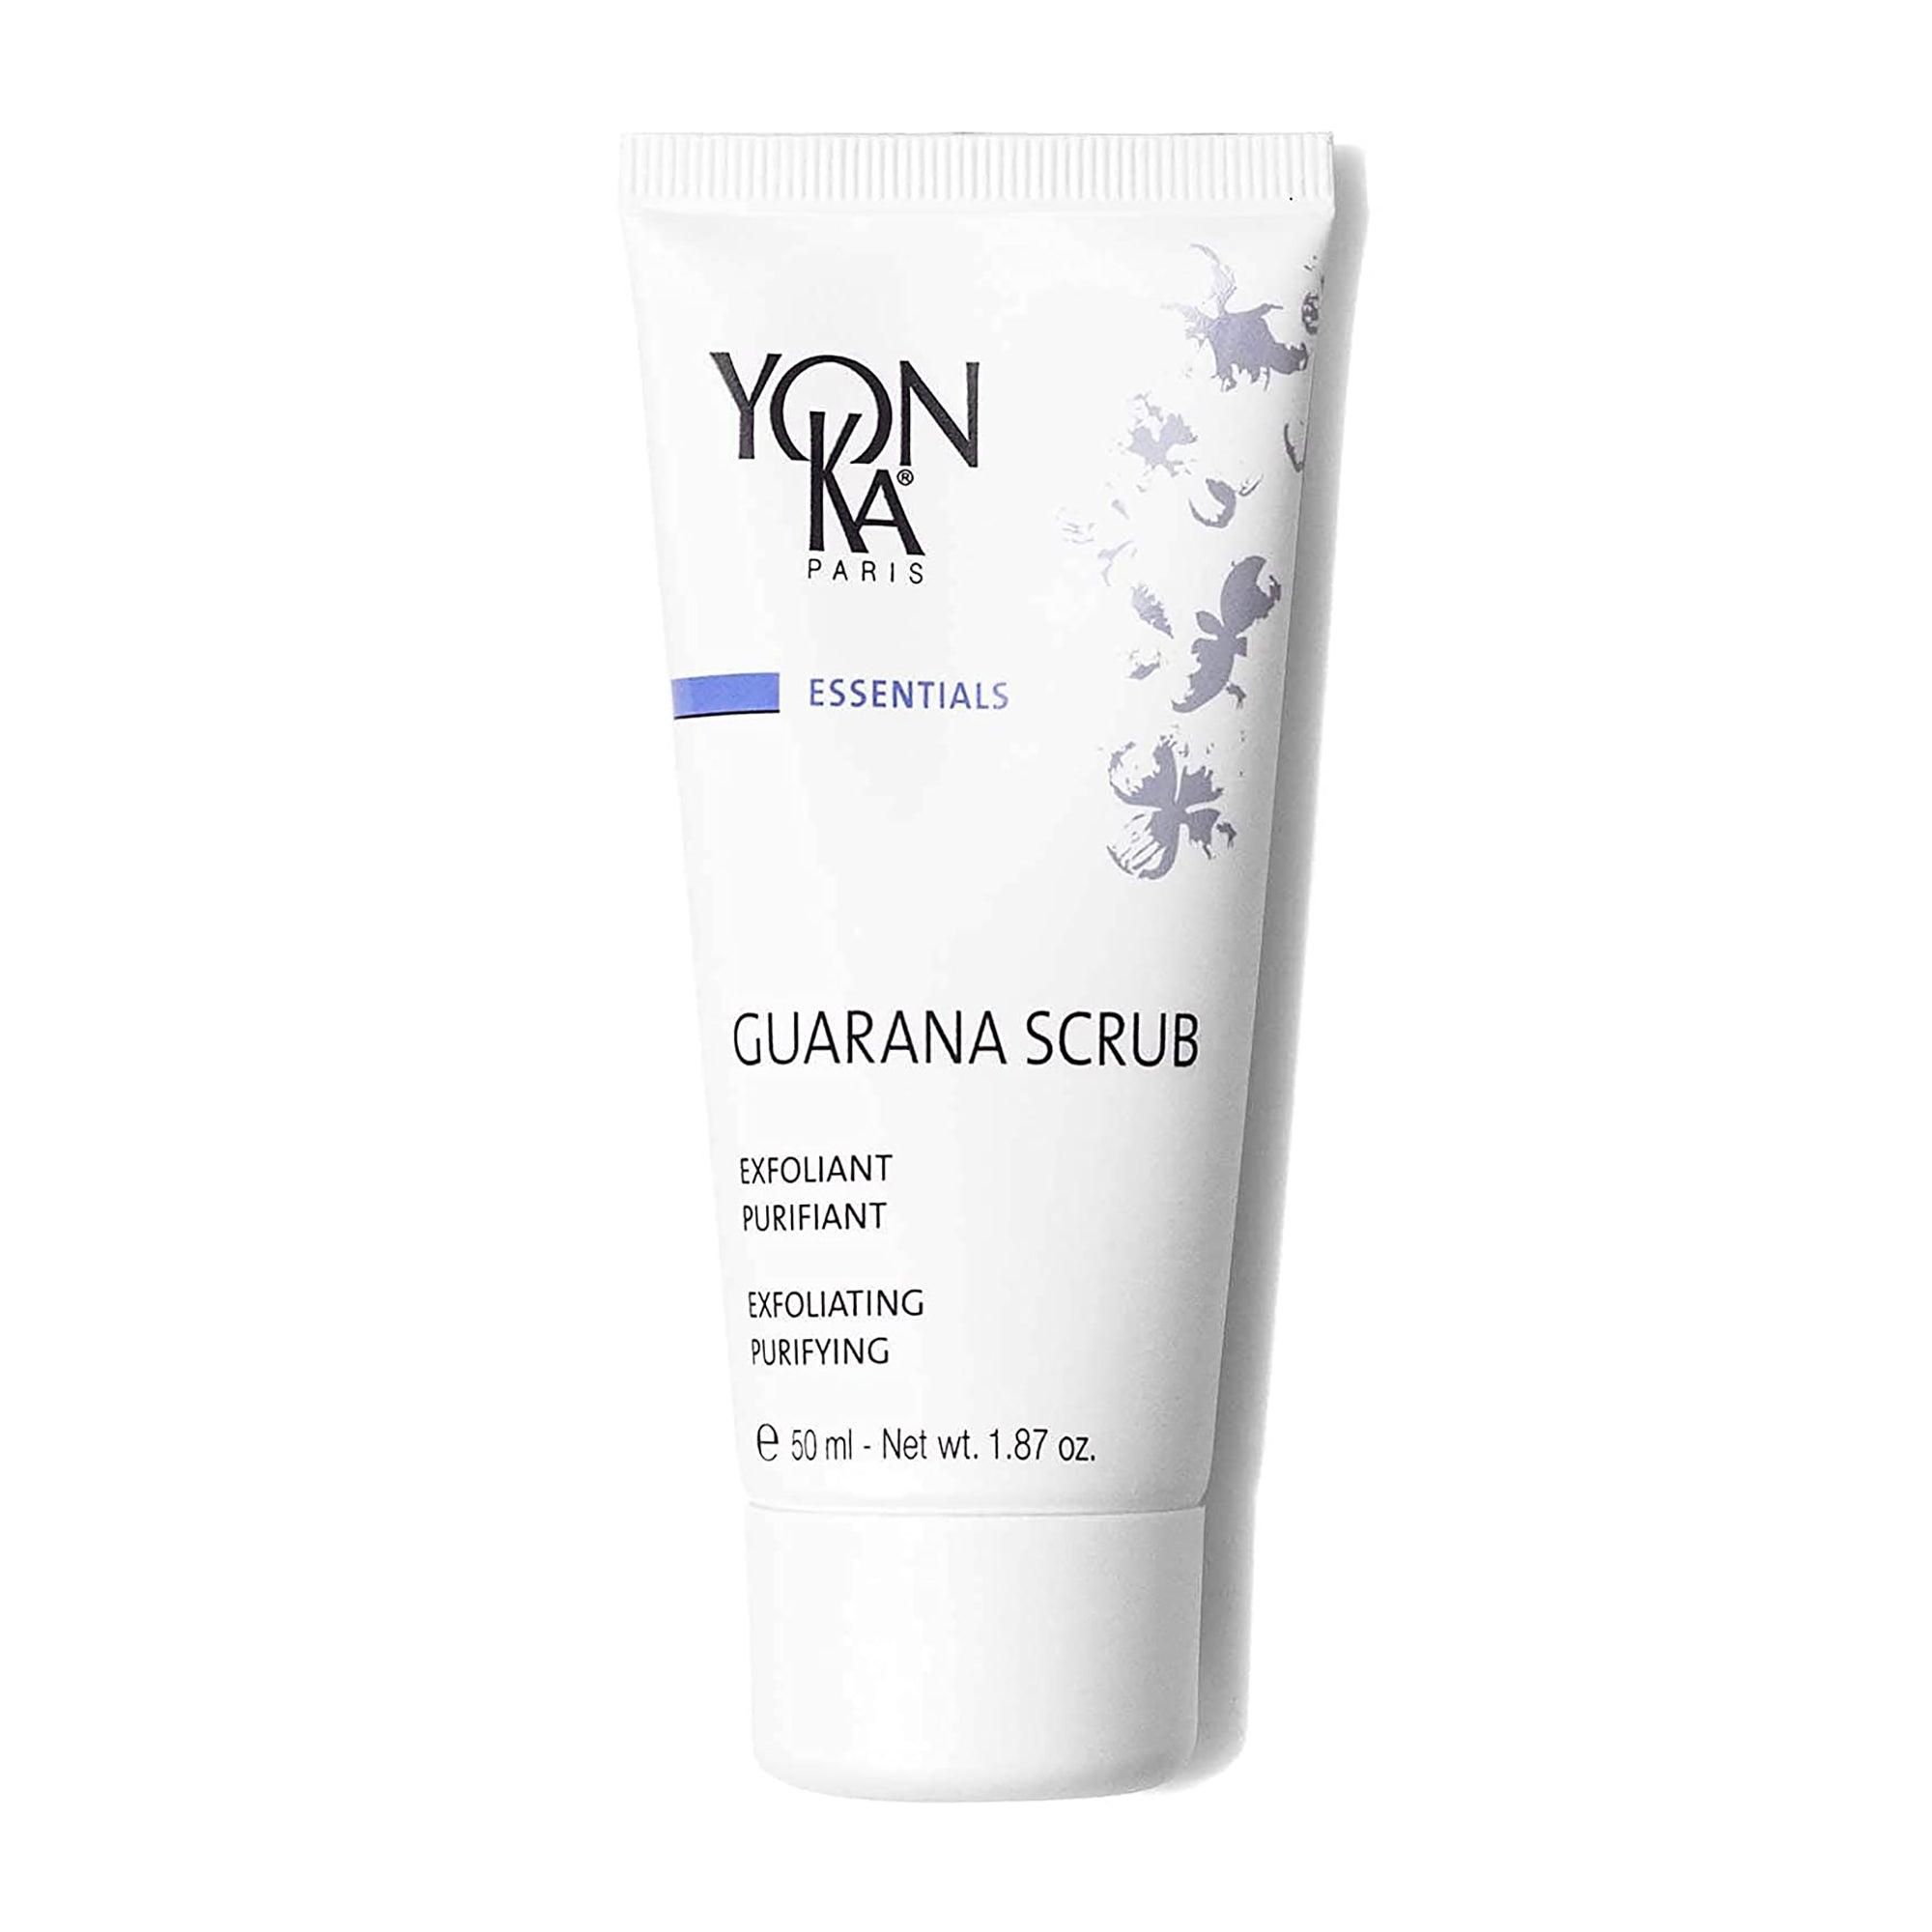 Yon-ka Essentials Guarana Scrub / 1.8OZ